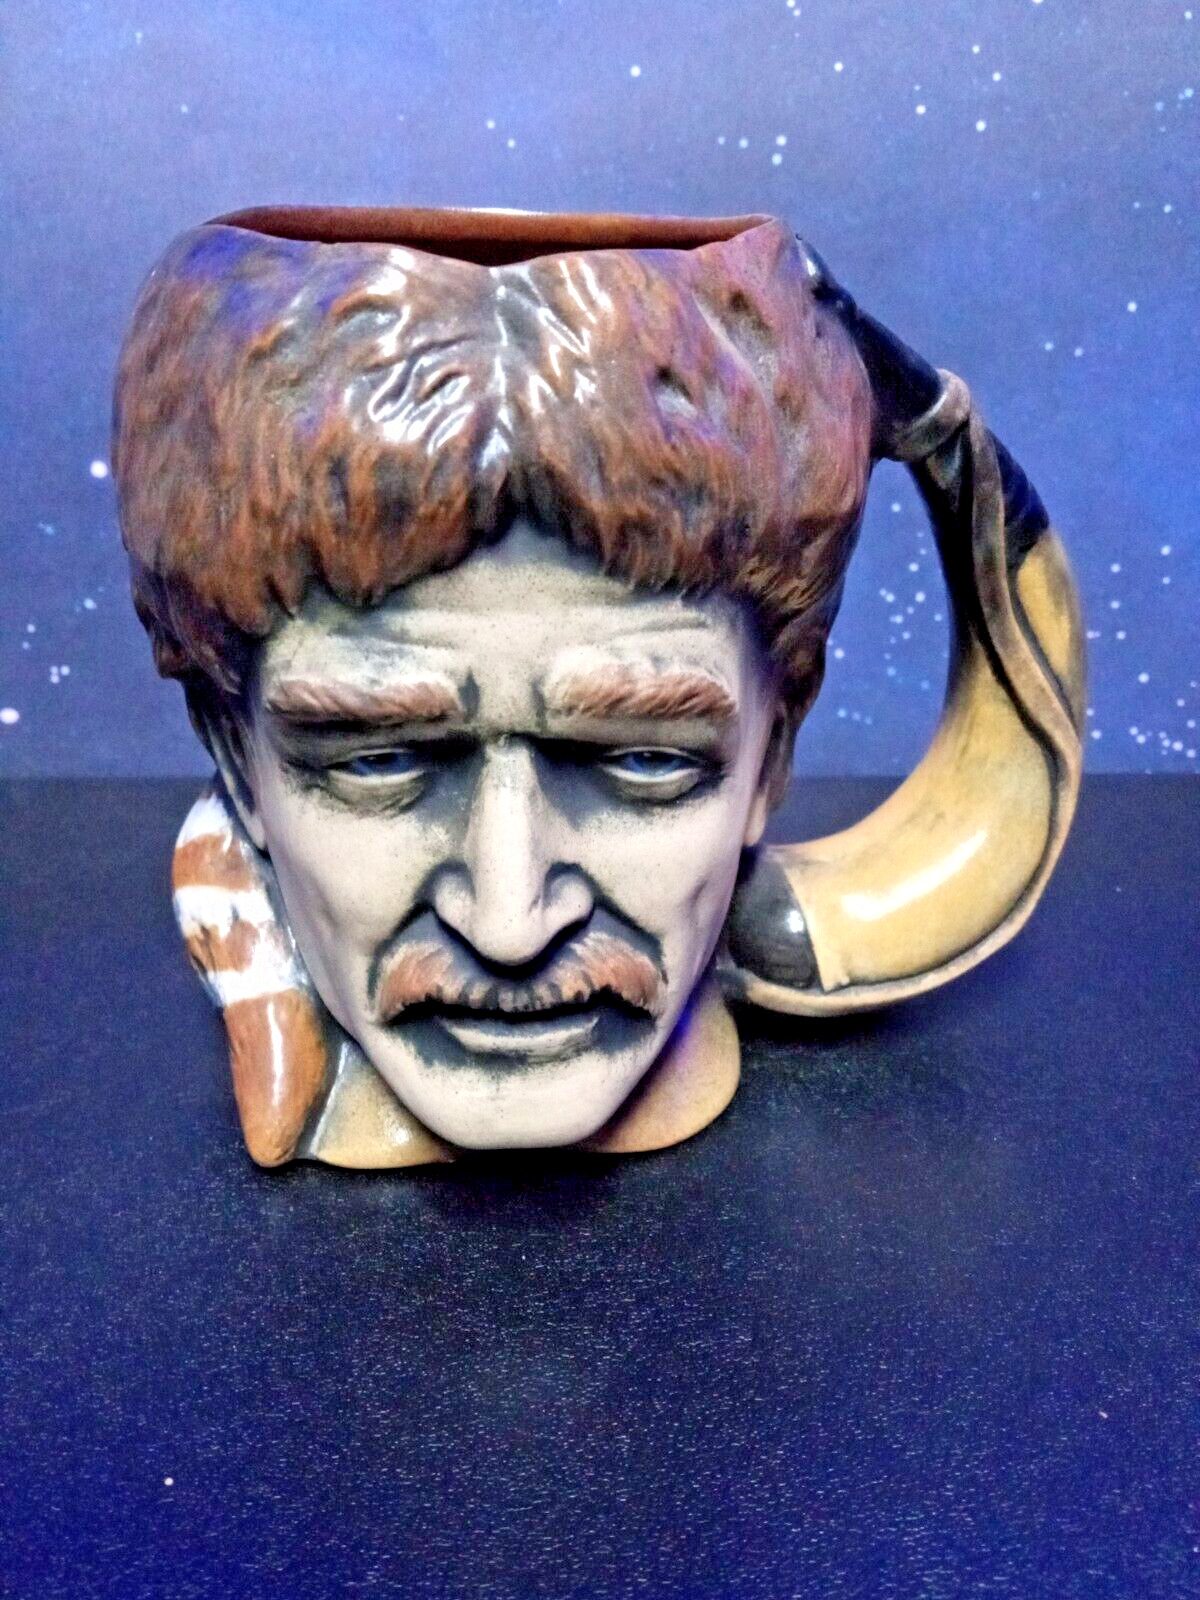 1981 Davy Crockett Mug Cup Stein American Heritage Ceramics by Ann Benjamin